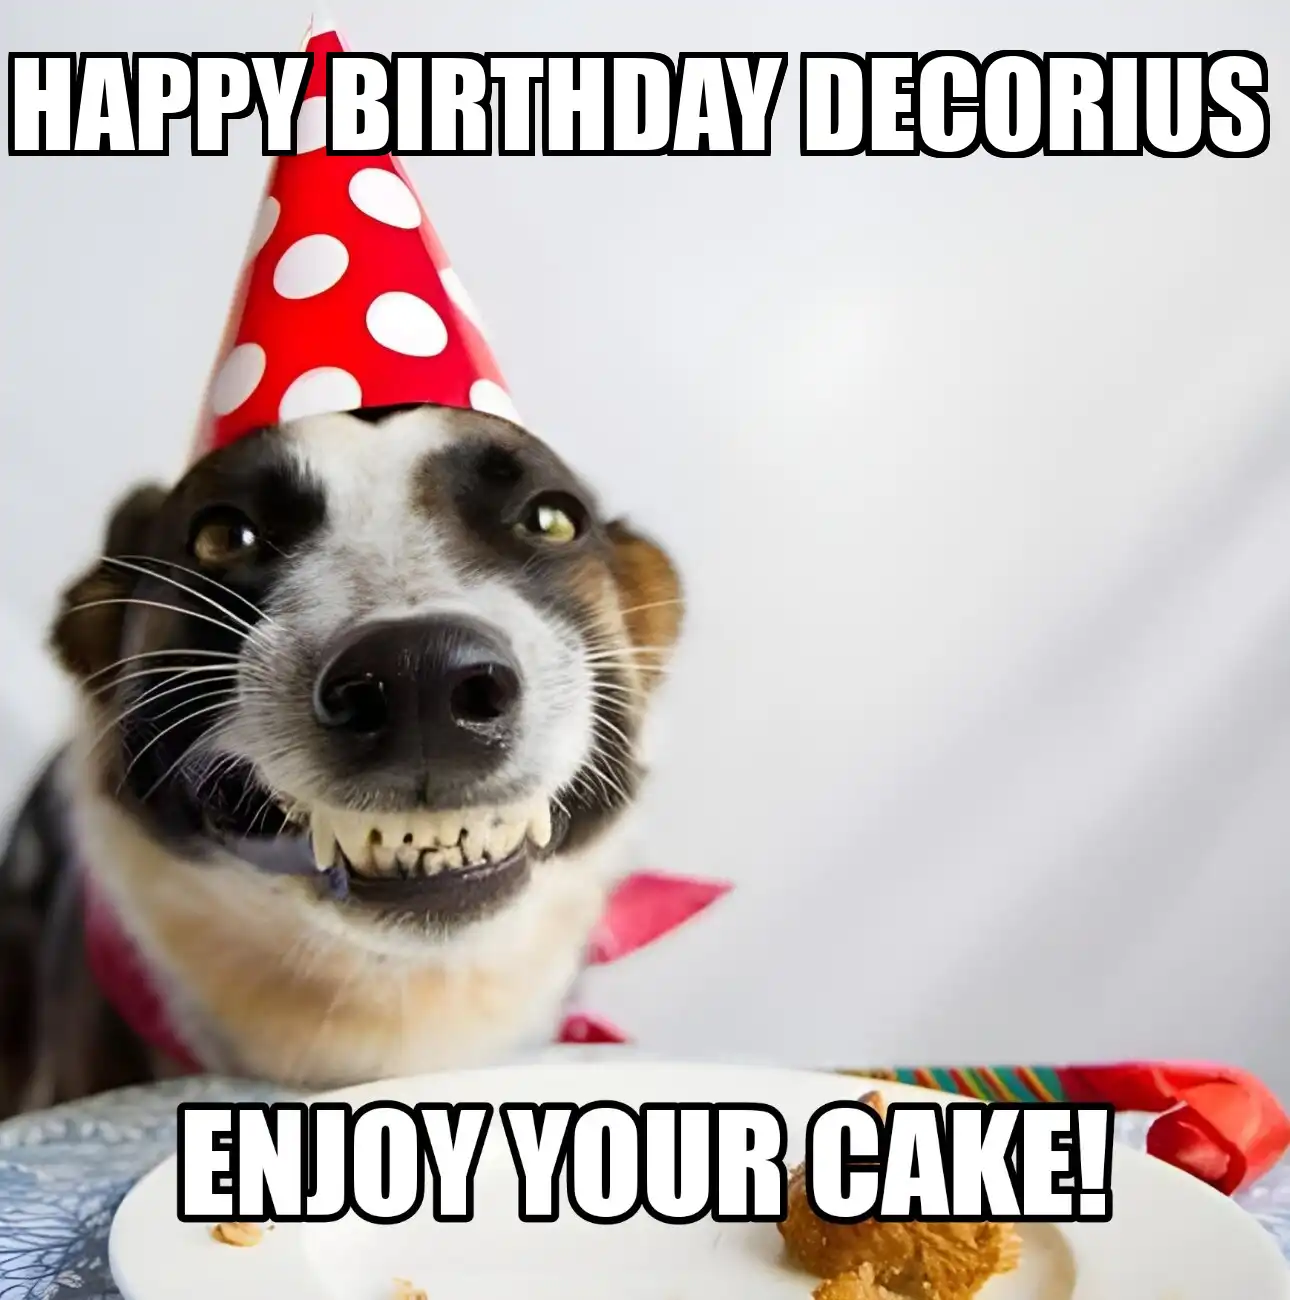 Happy Birthday Decorius Enjoy Your Cake Dog Meme